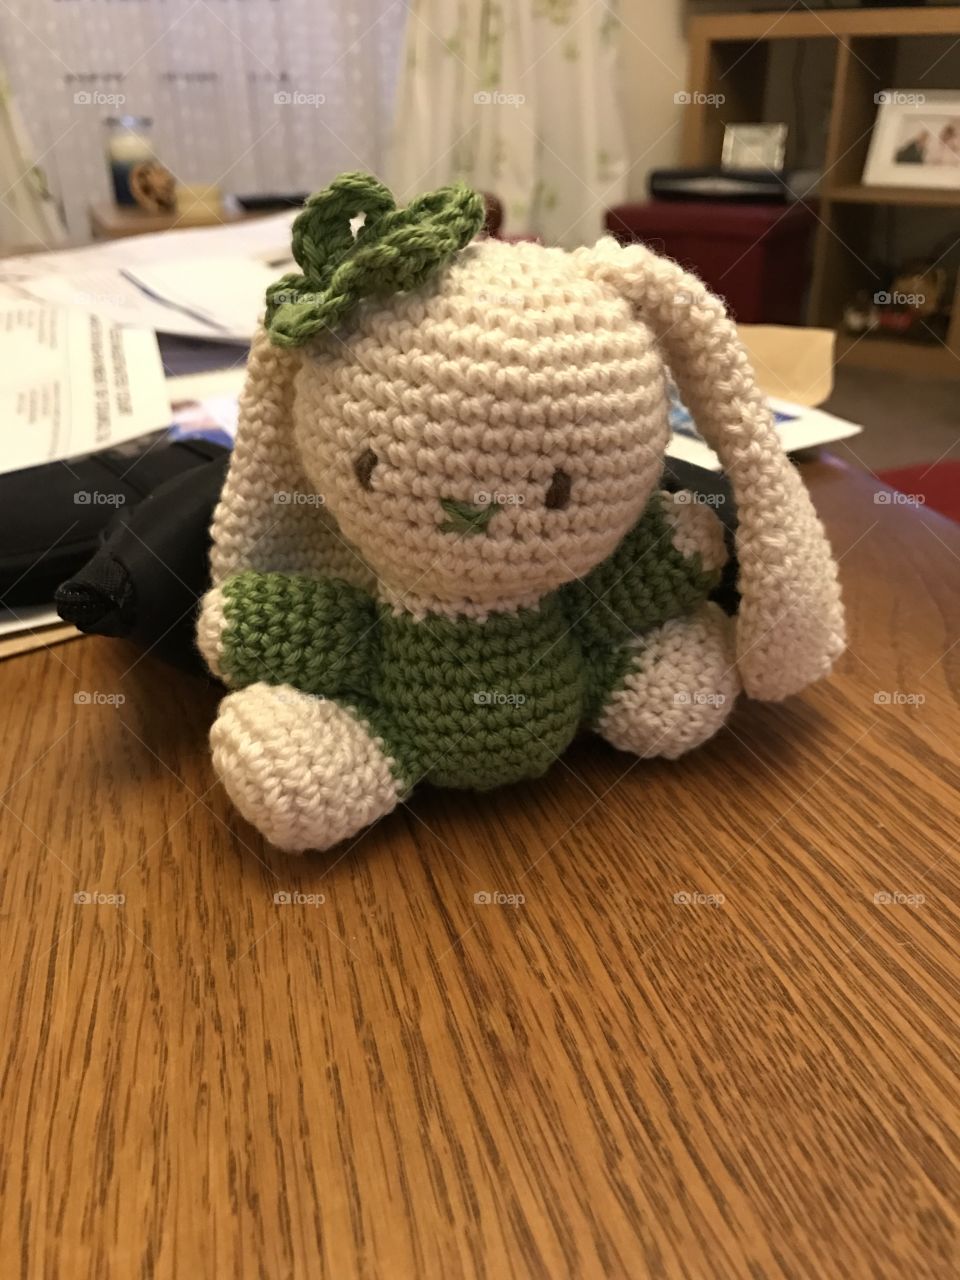 Bunny crochet yarn craft project
